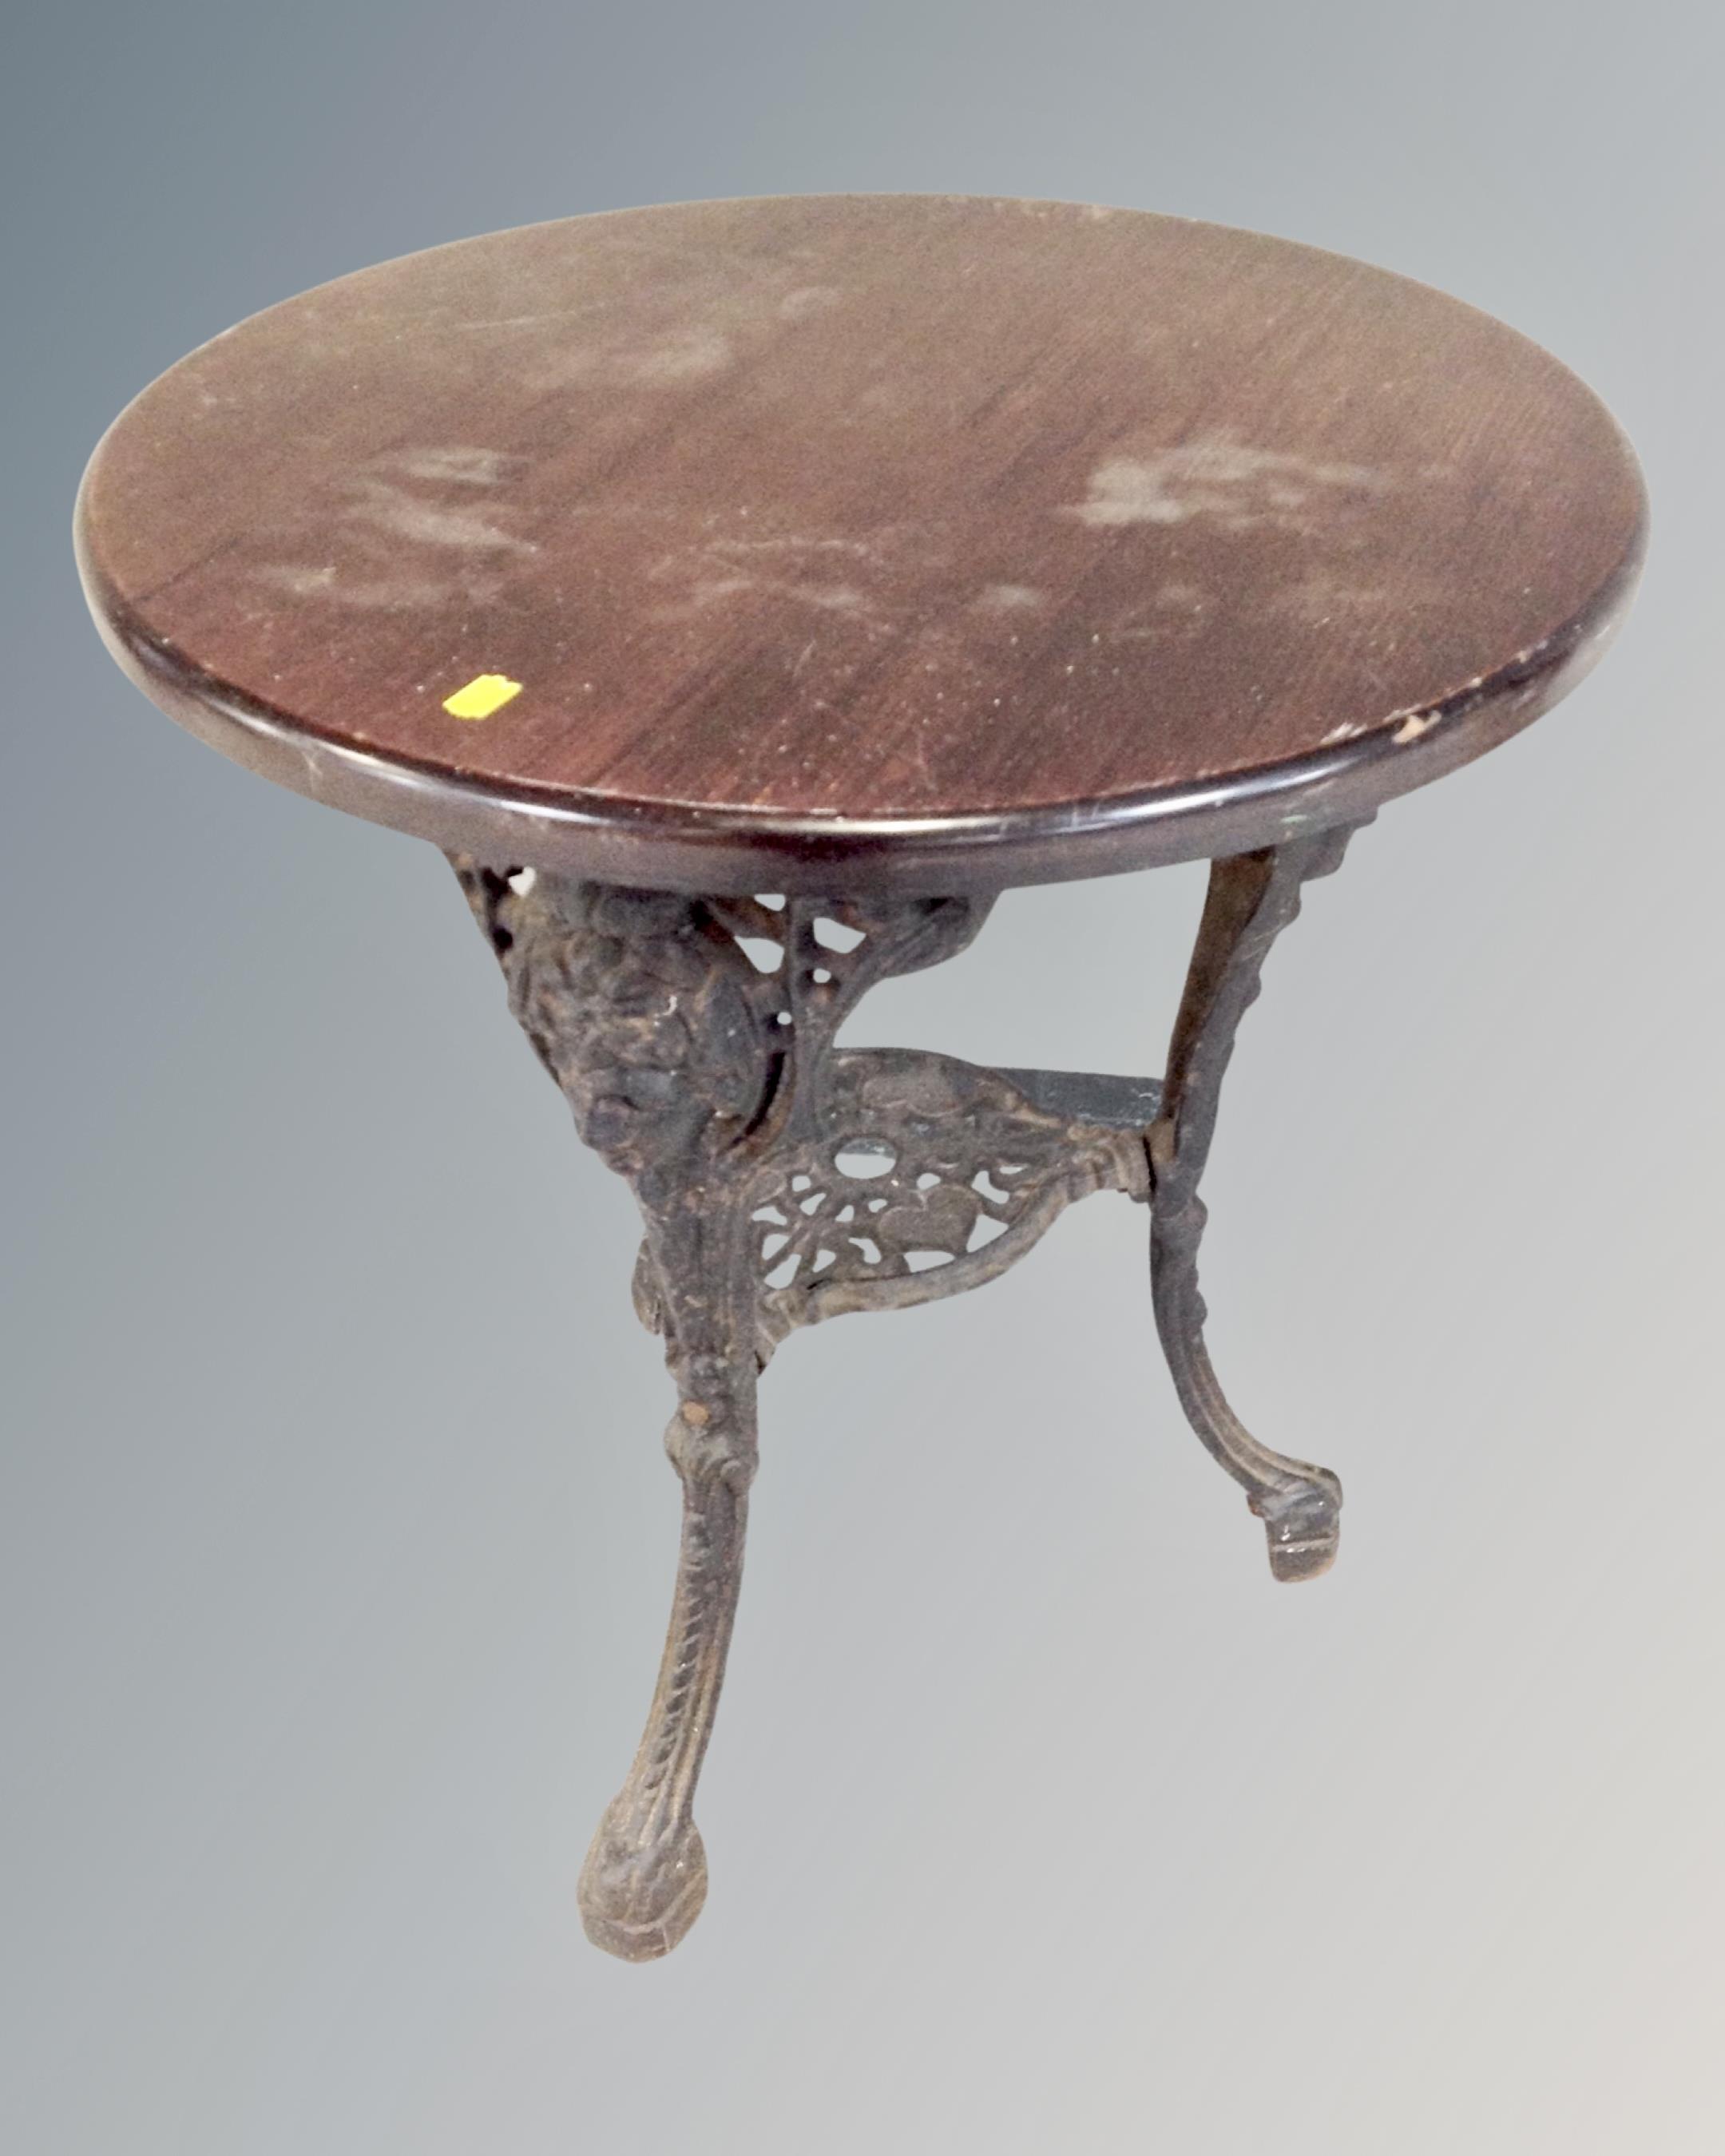 A vintage circular cast iron base pub table.